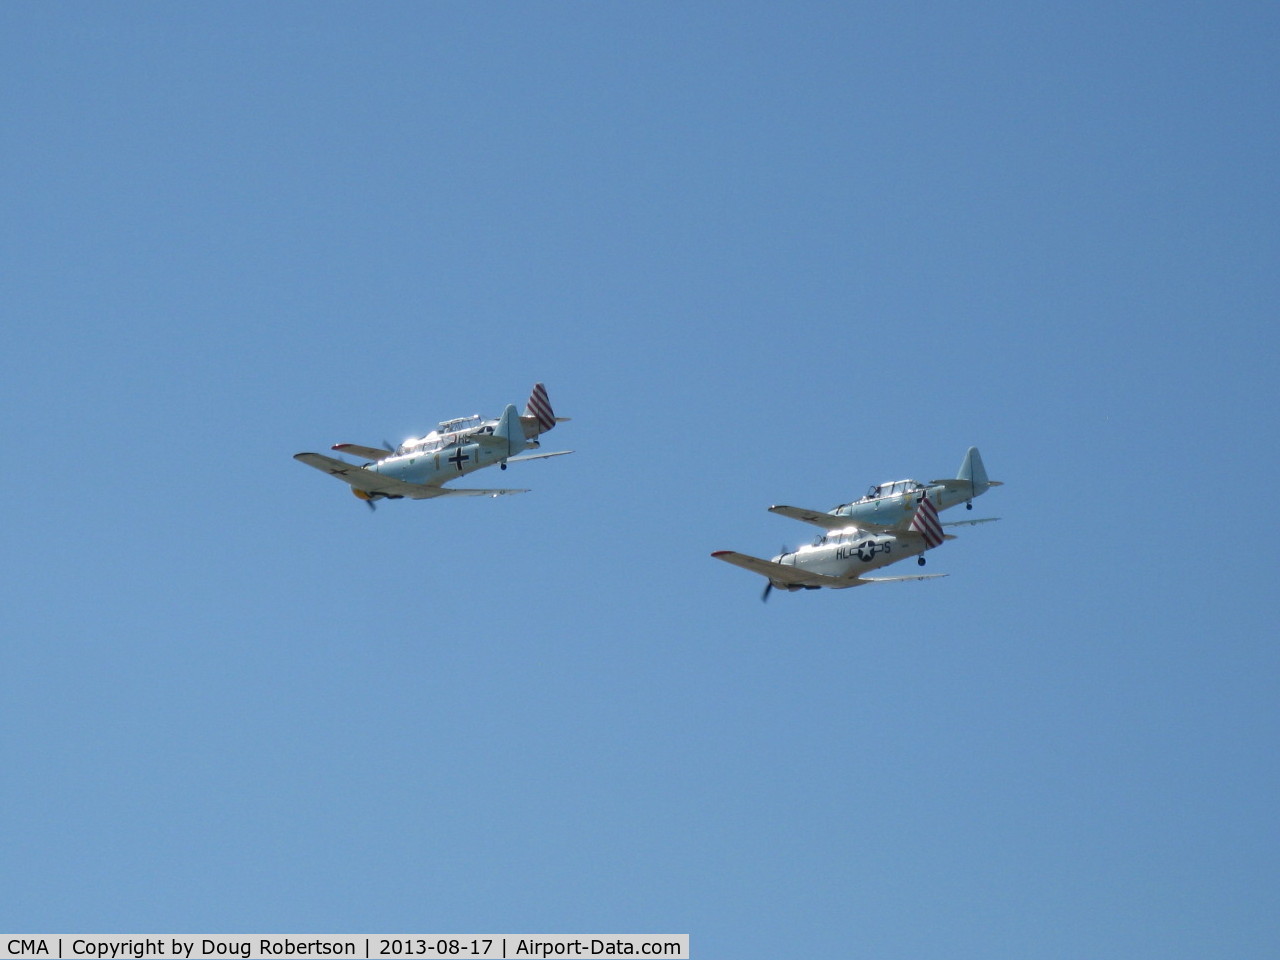 Camarillo Airport (CMA) - Condor Squadron fast pass over Rwy 26 at Wings Over Camarillo Airshow 2013